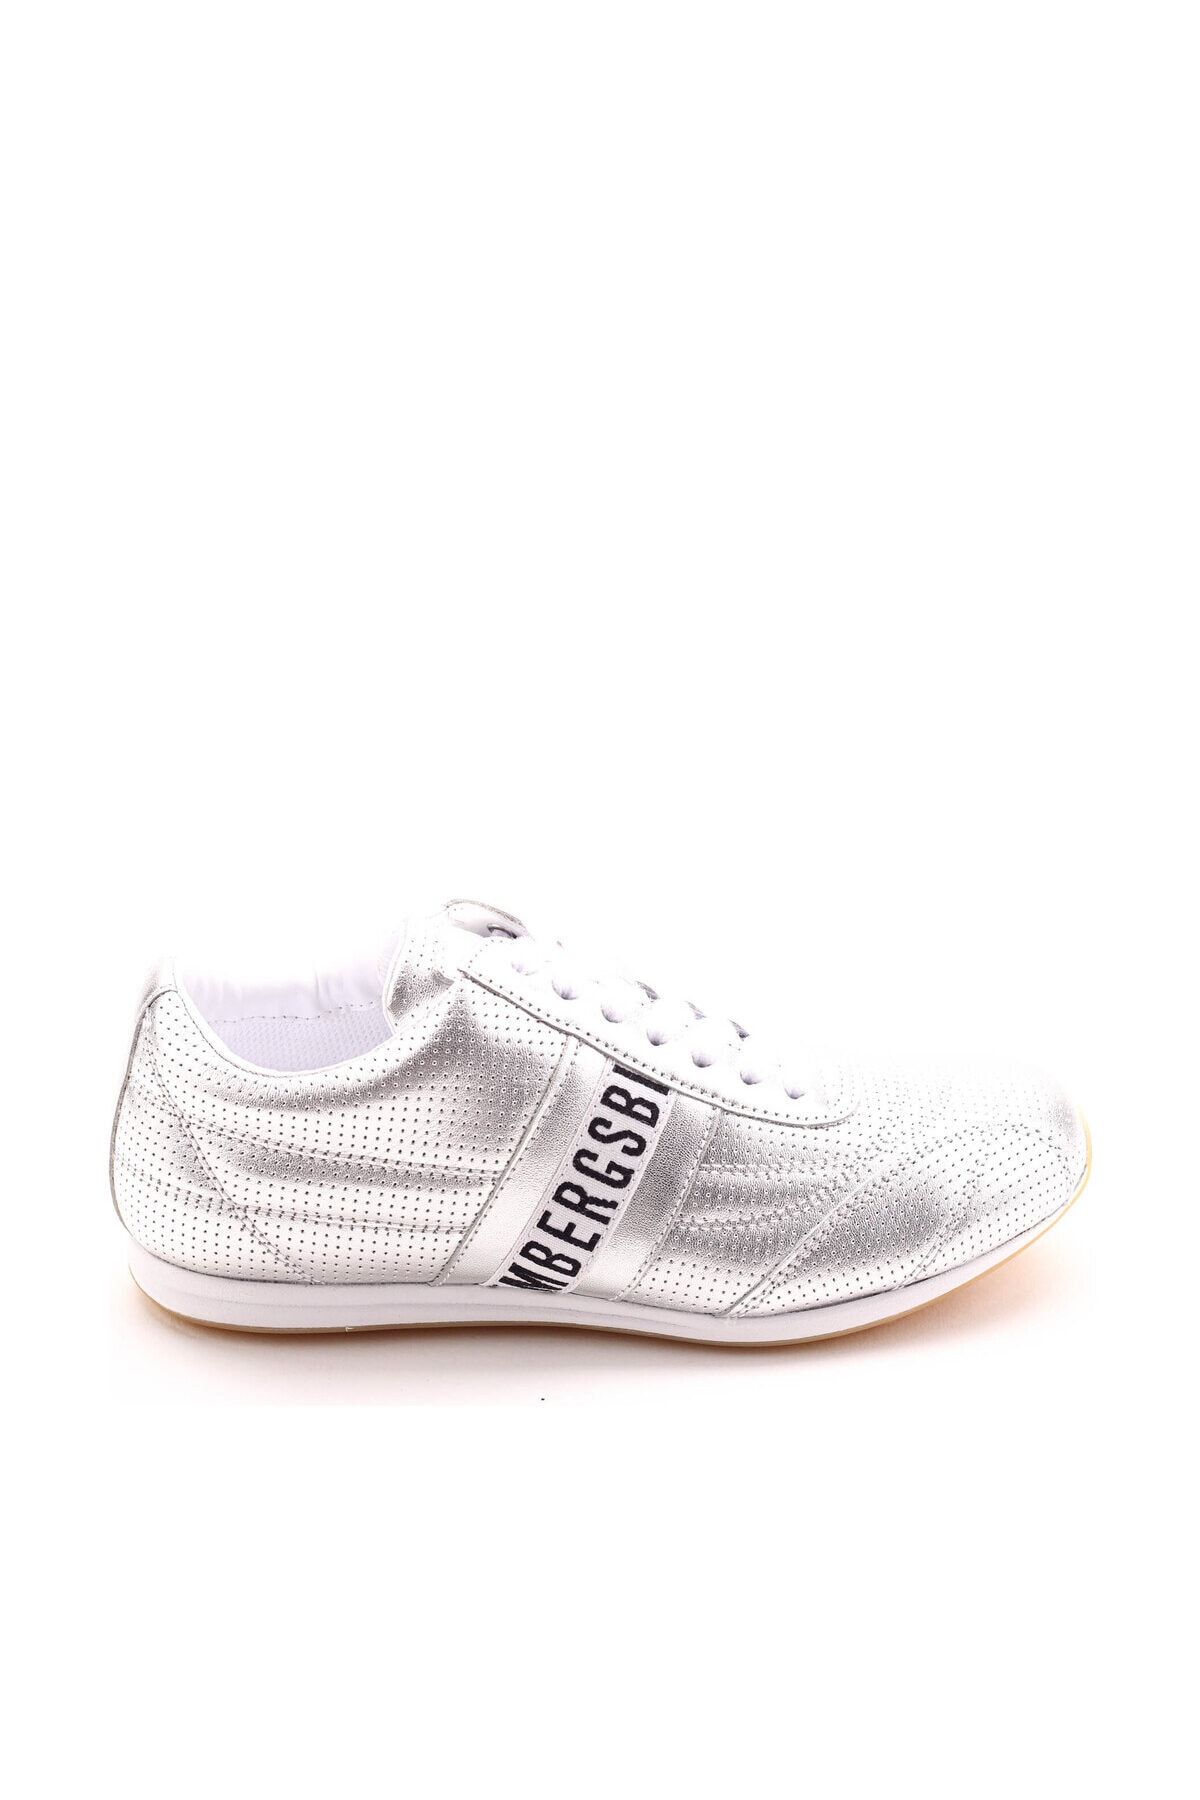 Bikkembergs Sneakers - Silver - Flat - Trendyol